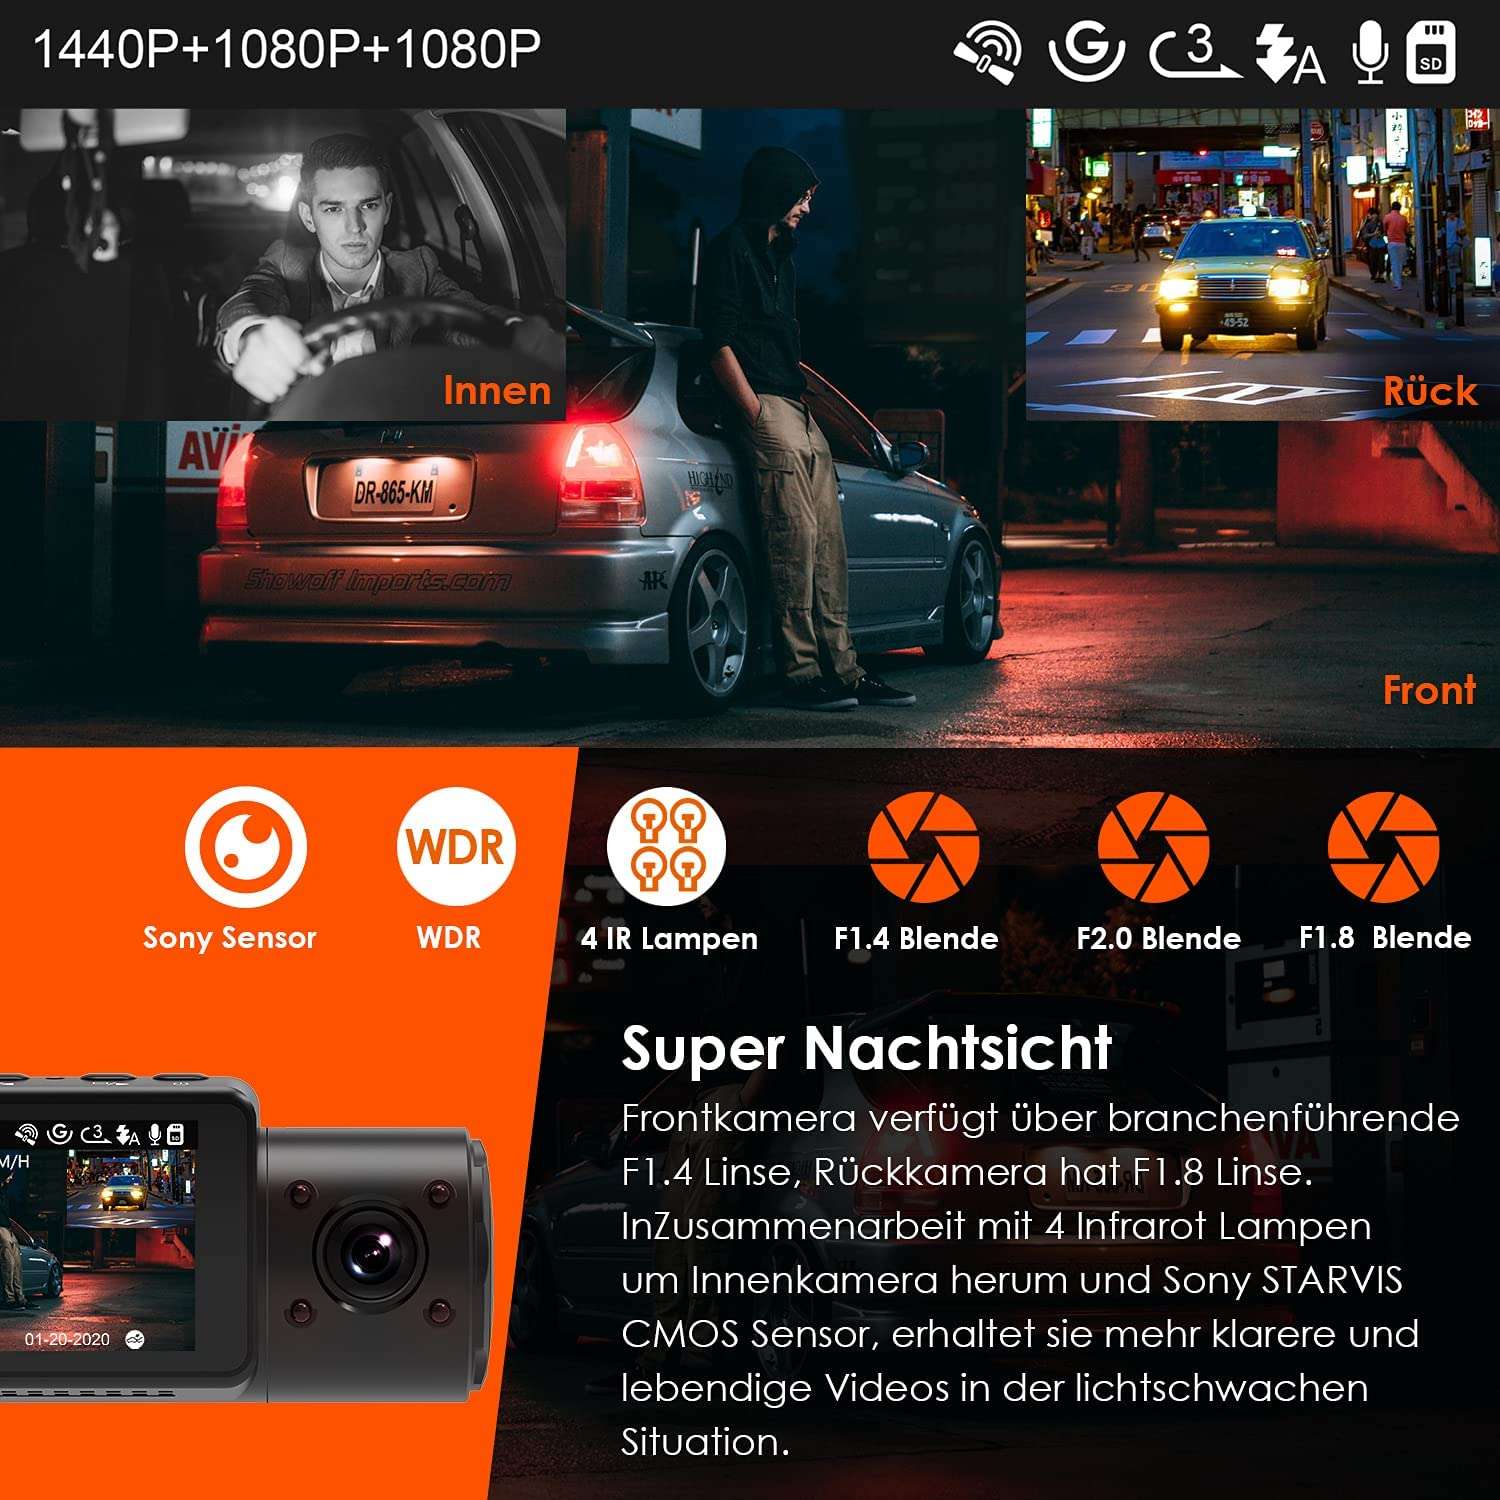 Vantrue N4 3 Kanal 1440p Araç Kamerası | GPS'im, Kitim ve SD'm - Paket